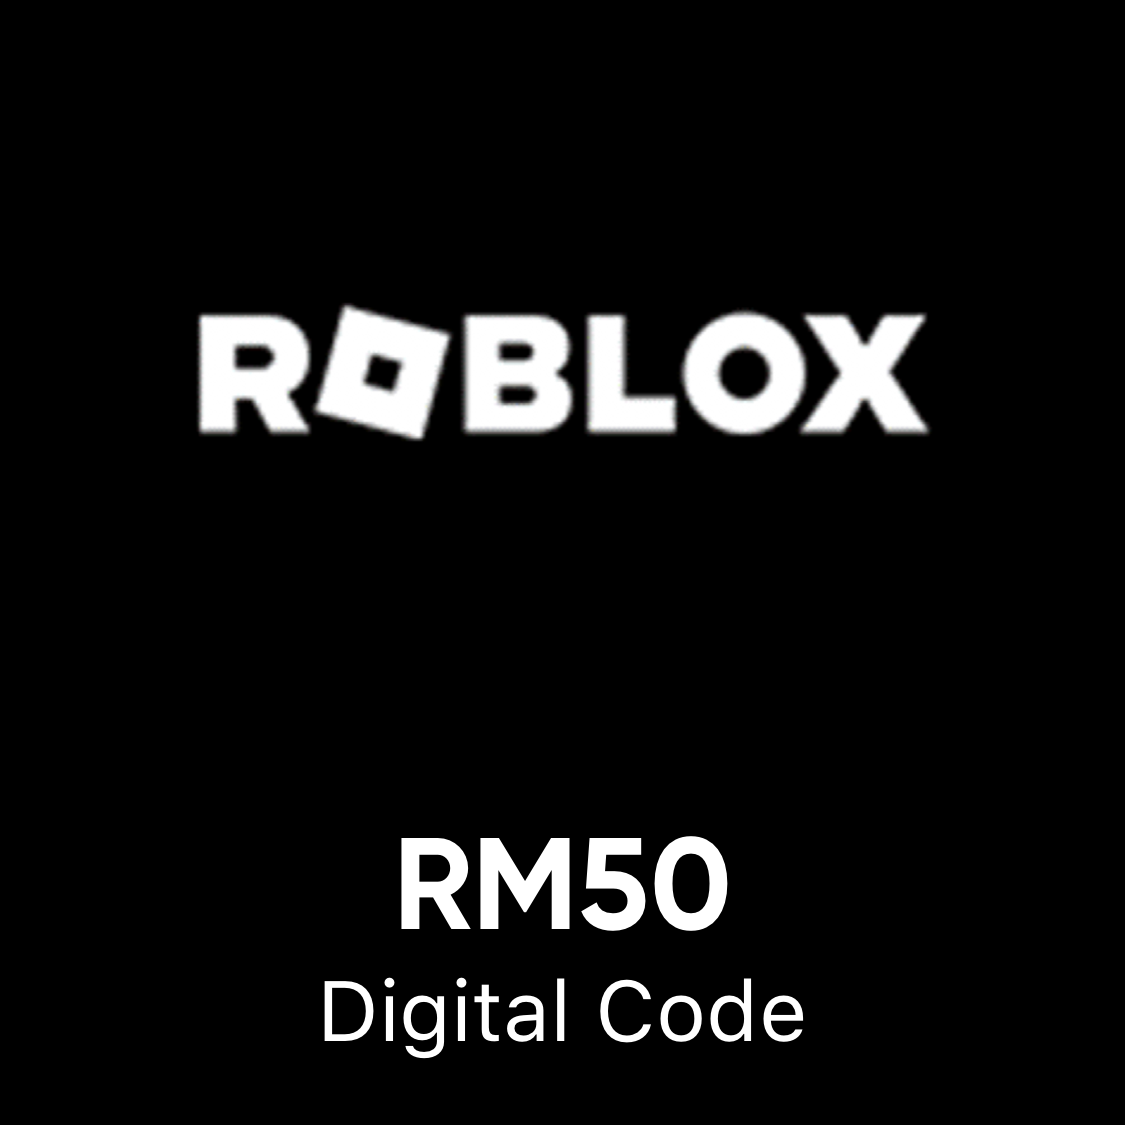 roblox-rm50-digitalcode.png